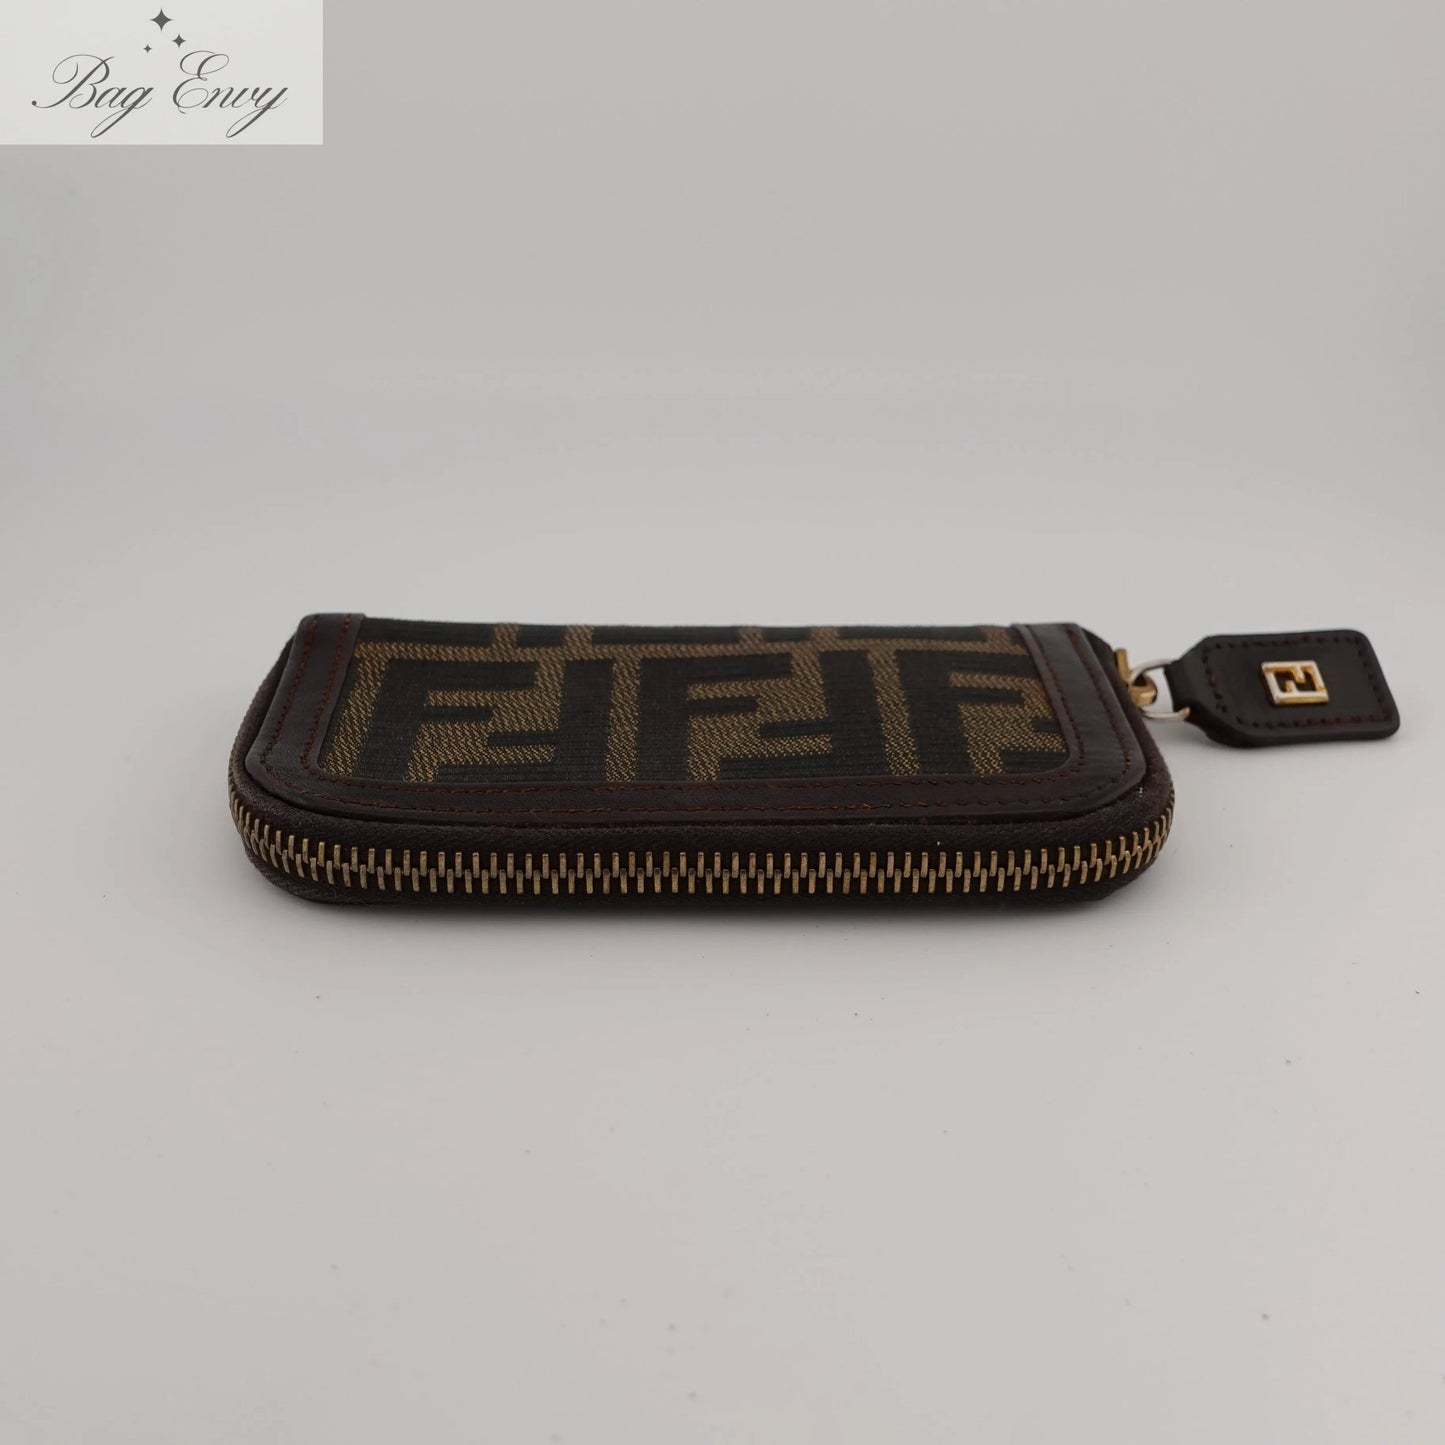 FENDI Zucca Zip Key/Card Holder - Bag Envy